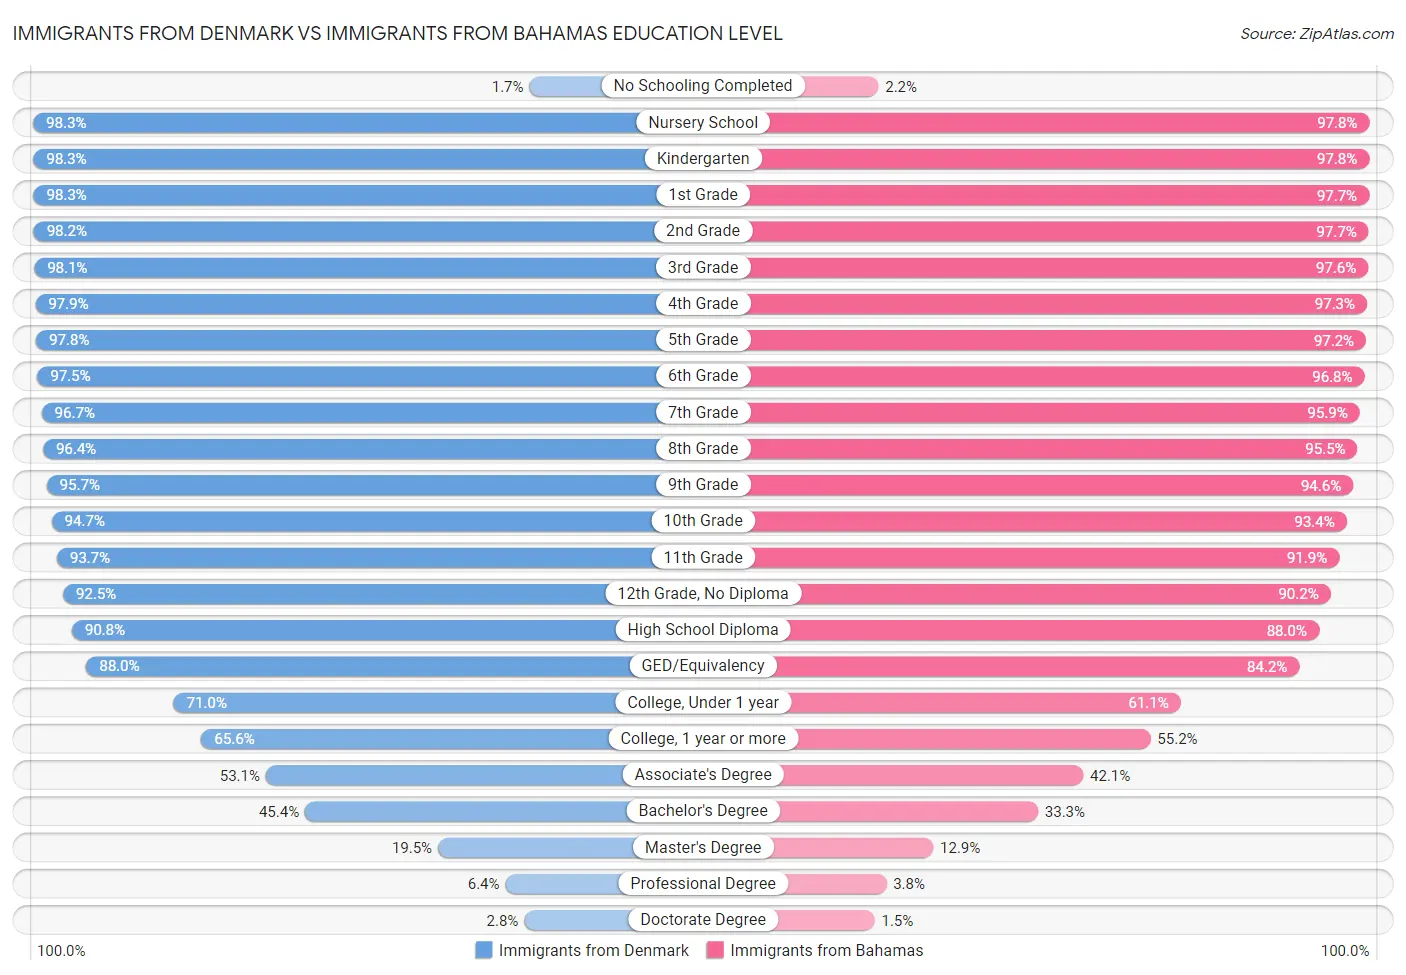 Immigrants from Denmark vs Immigrants from Bahamas Education Level